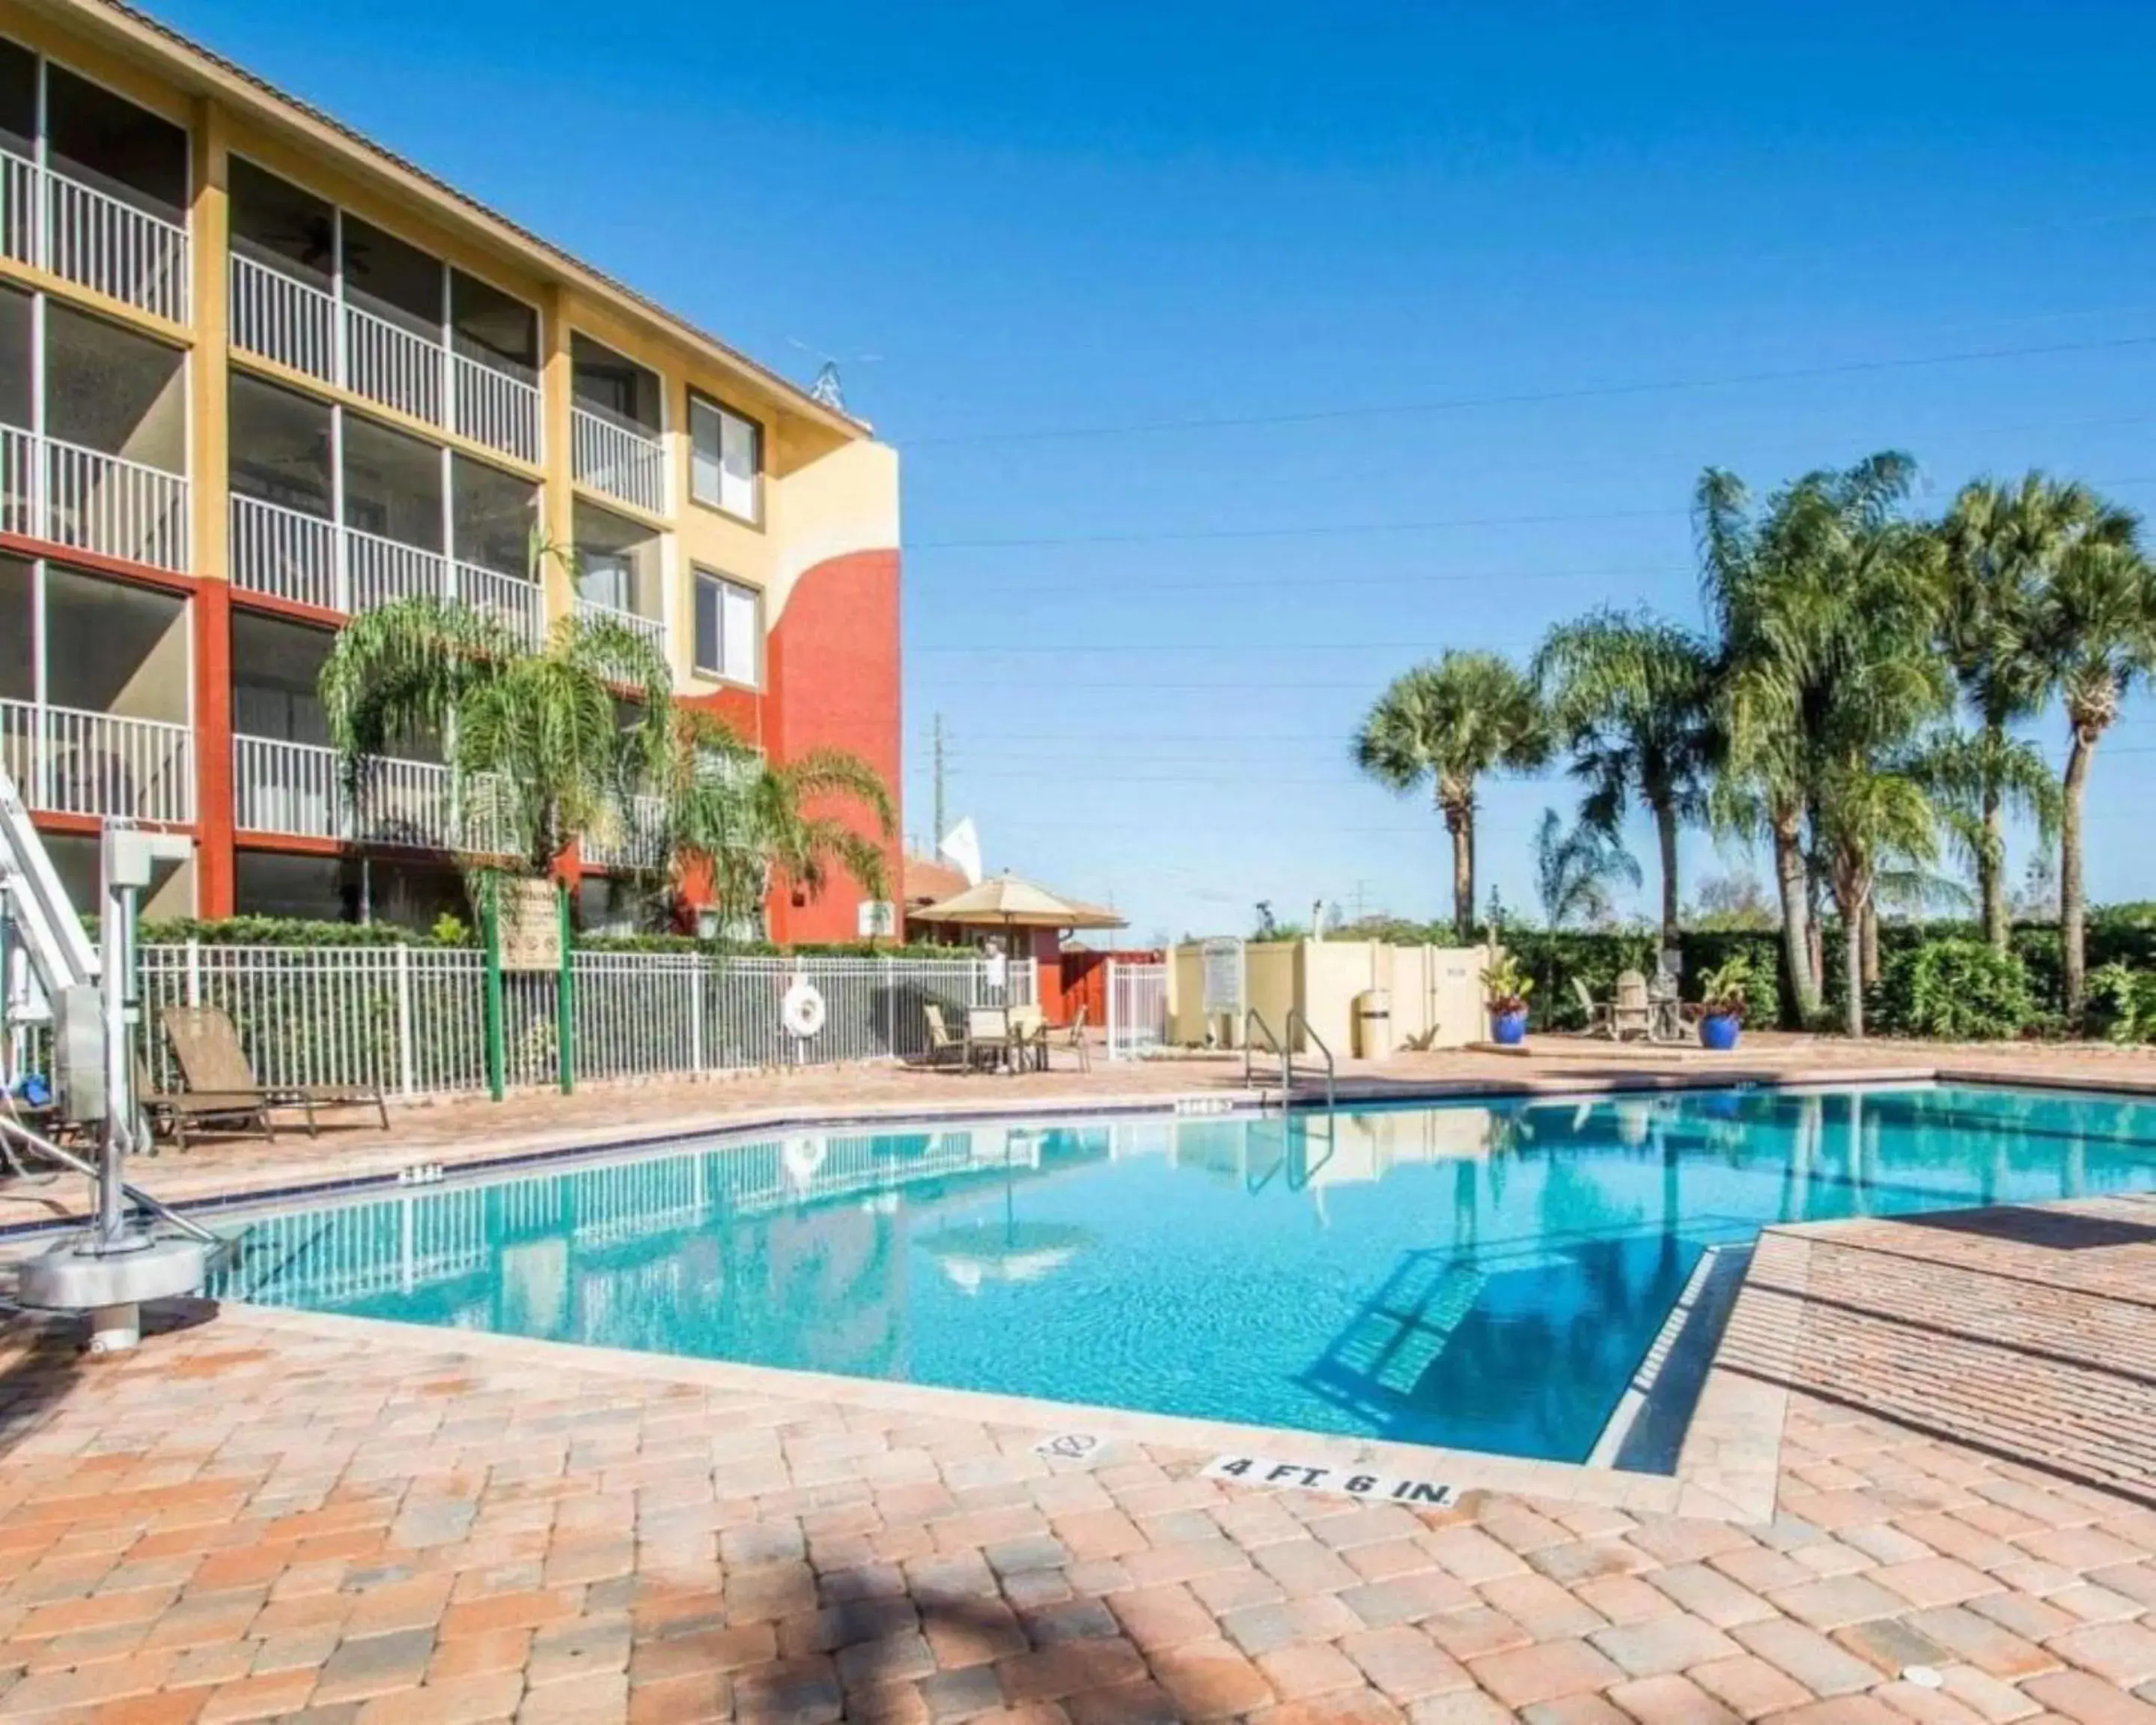 Swimming Pool in Bluegreen Vacations Orlando's Sunshine Resort